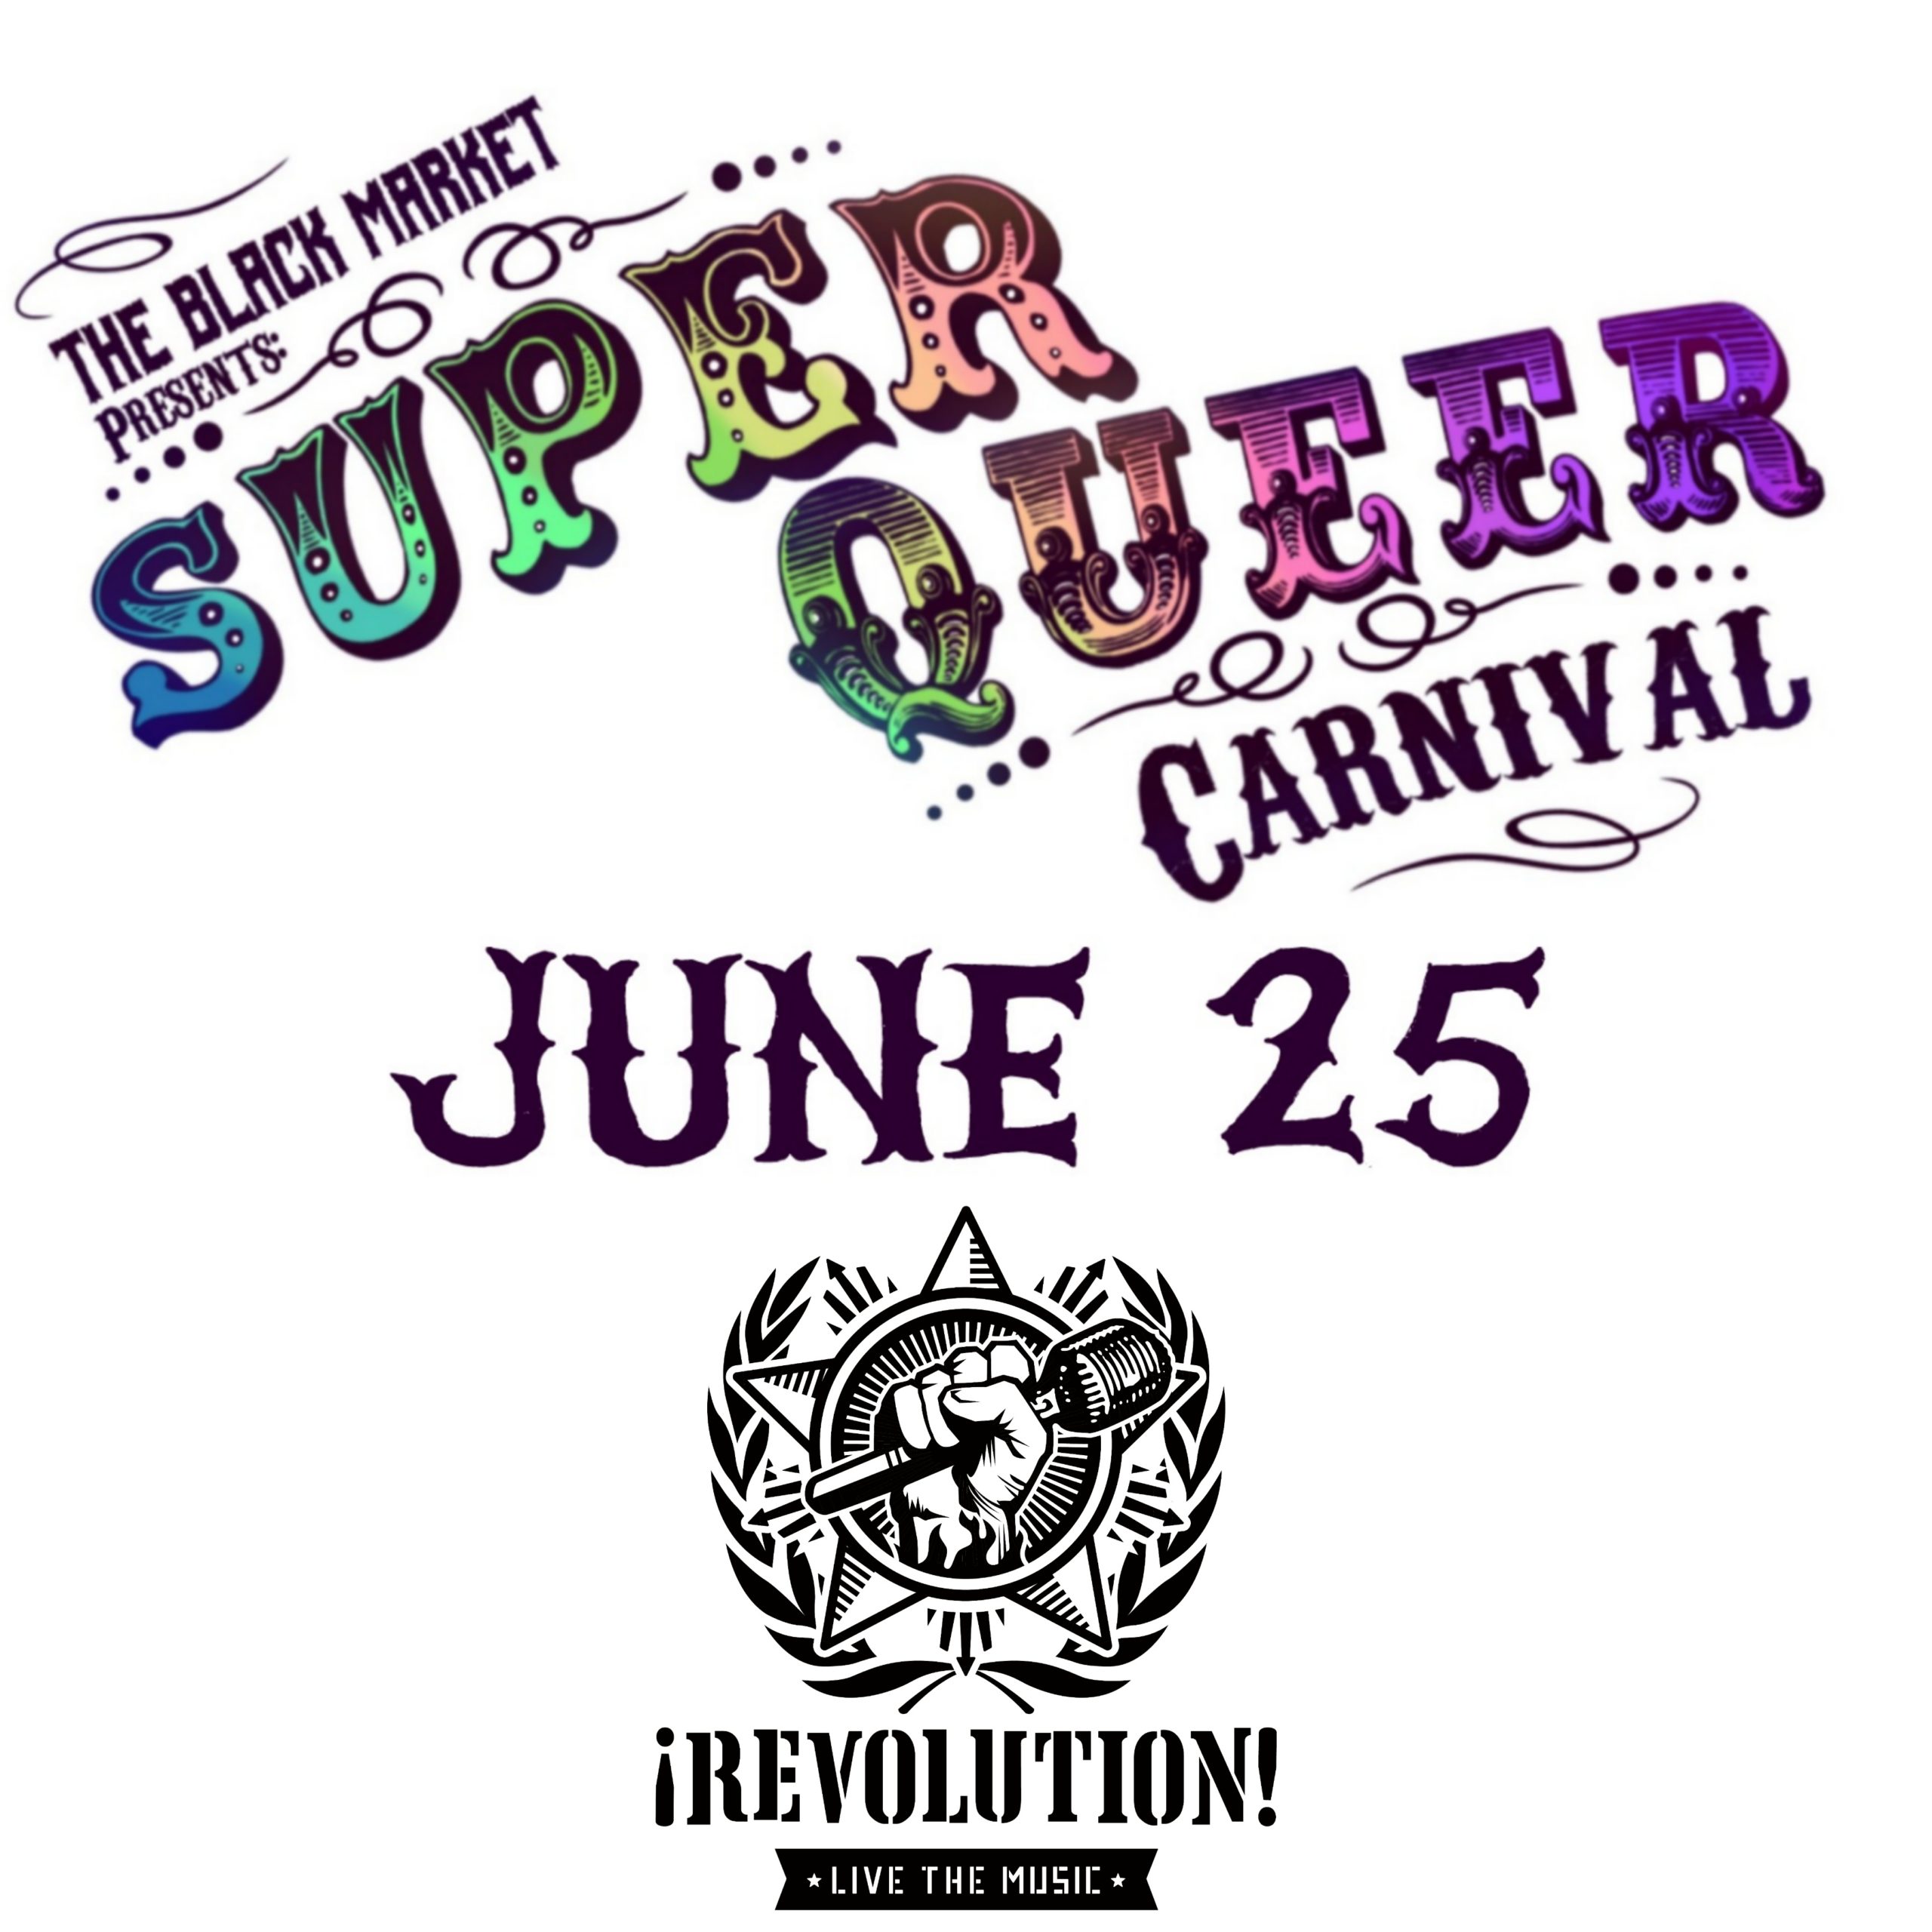 The Black Market Presents: Super Queer Carnival!